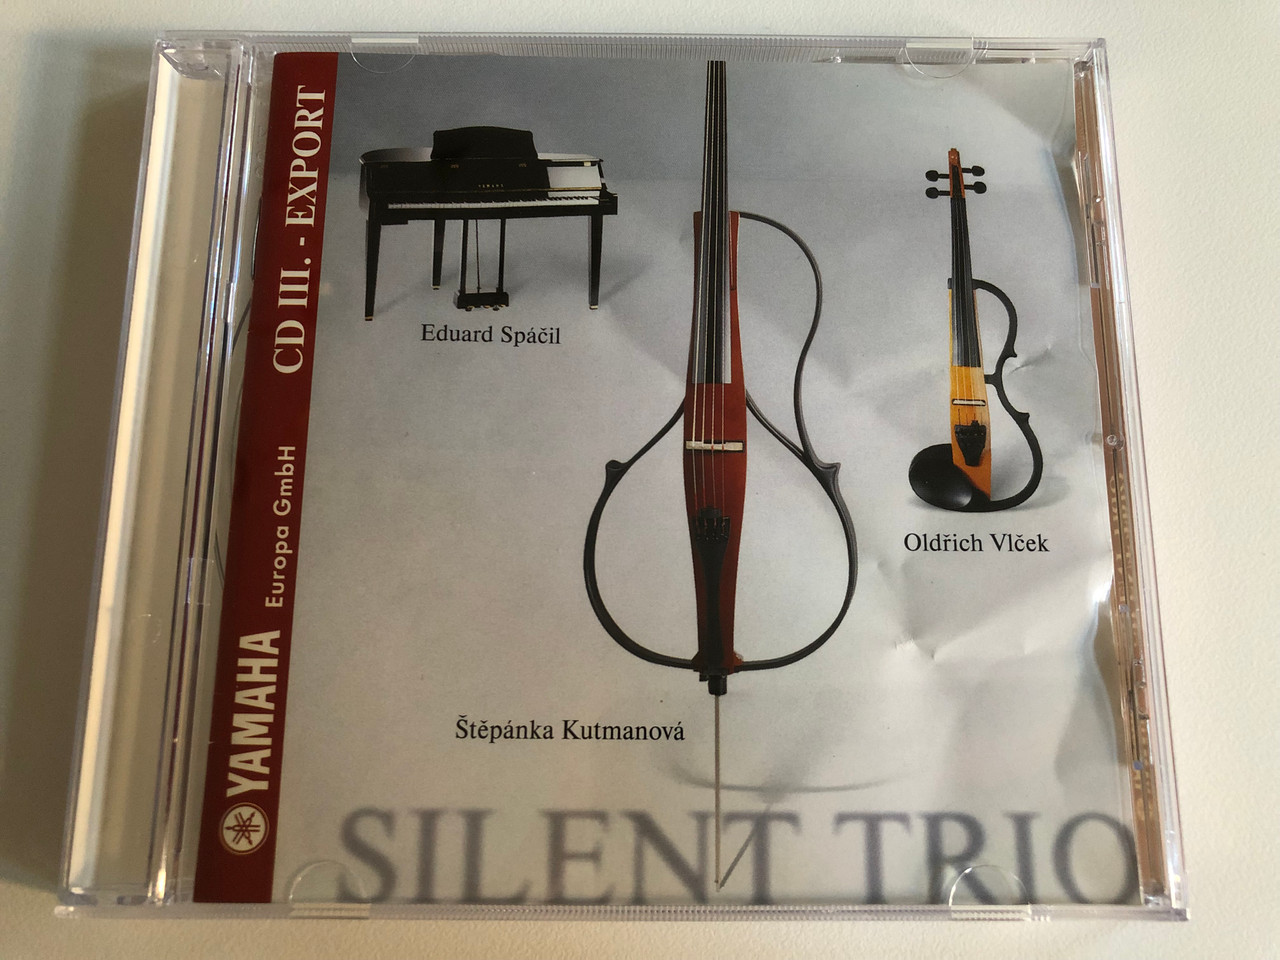 Silent Trio - Eduard Spačil, Oldrich Viček, Štepanka Kutmanova / Midi Music  Studio Audio CD 1999 / MM 0007-2531 - bibleinmylanguage